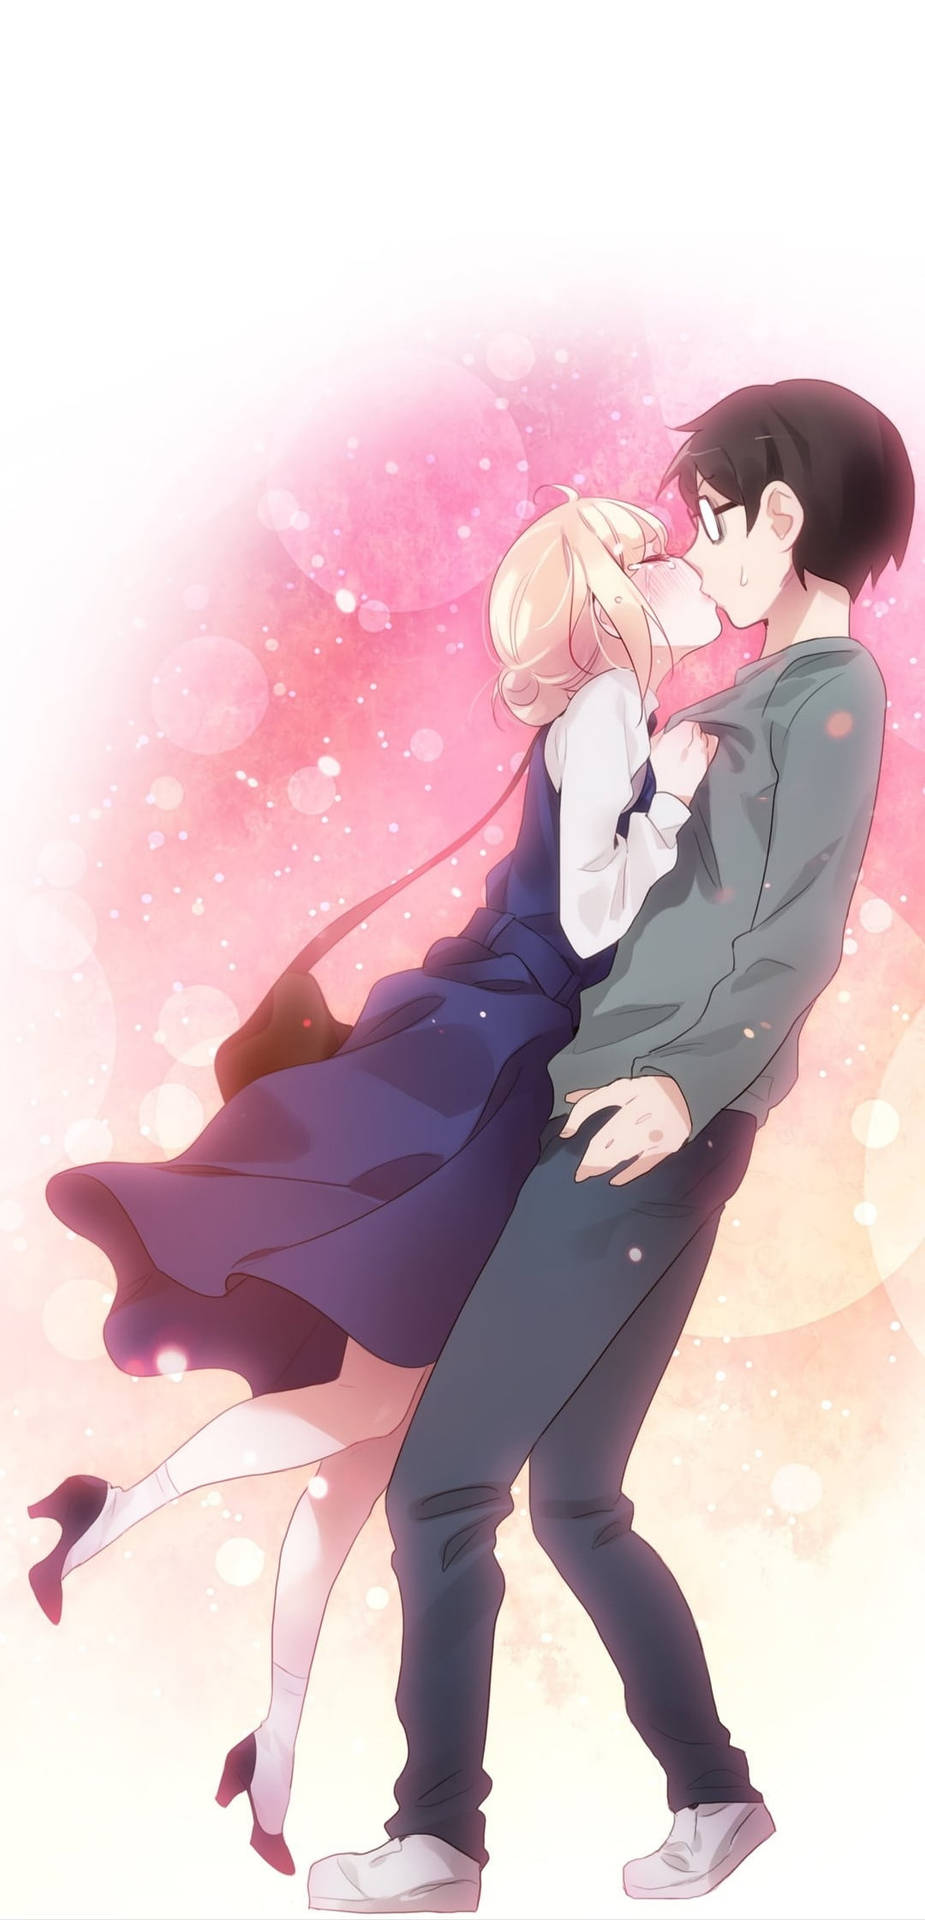 Kissing Aesthetic Anime Couple